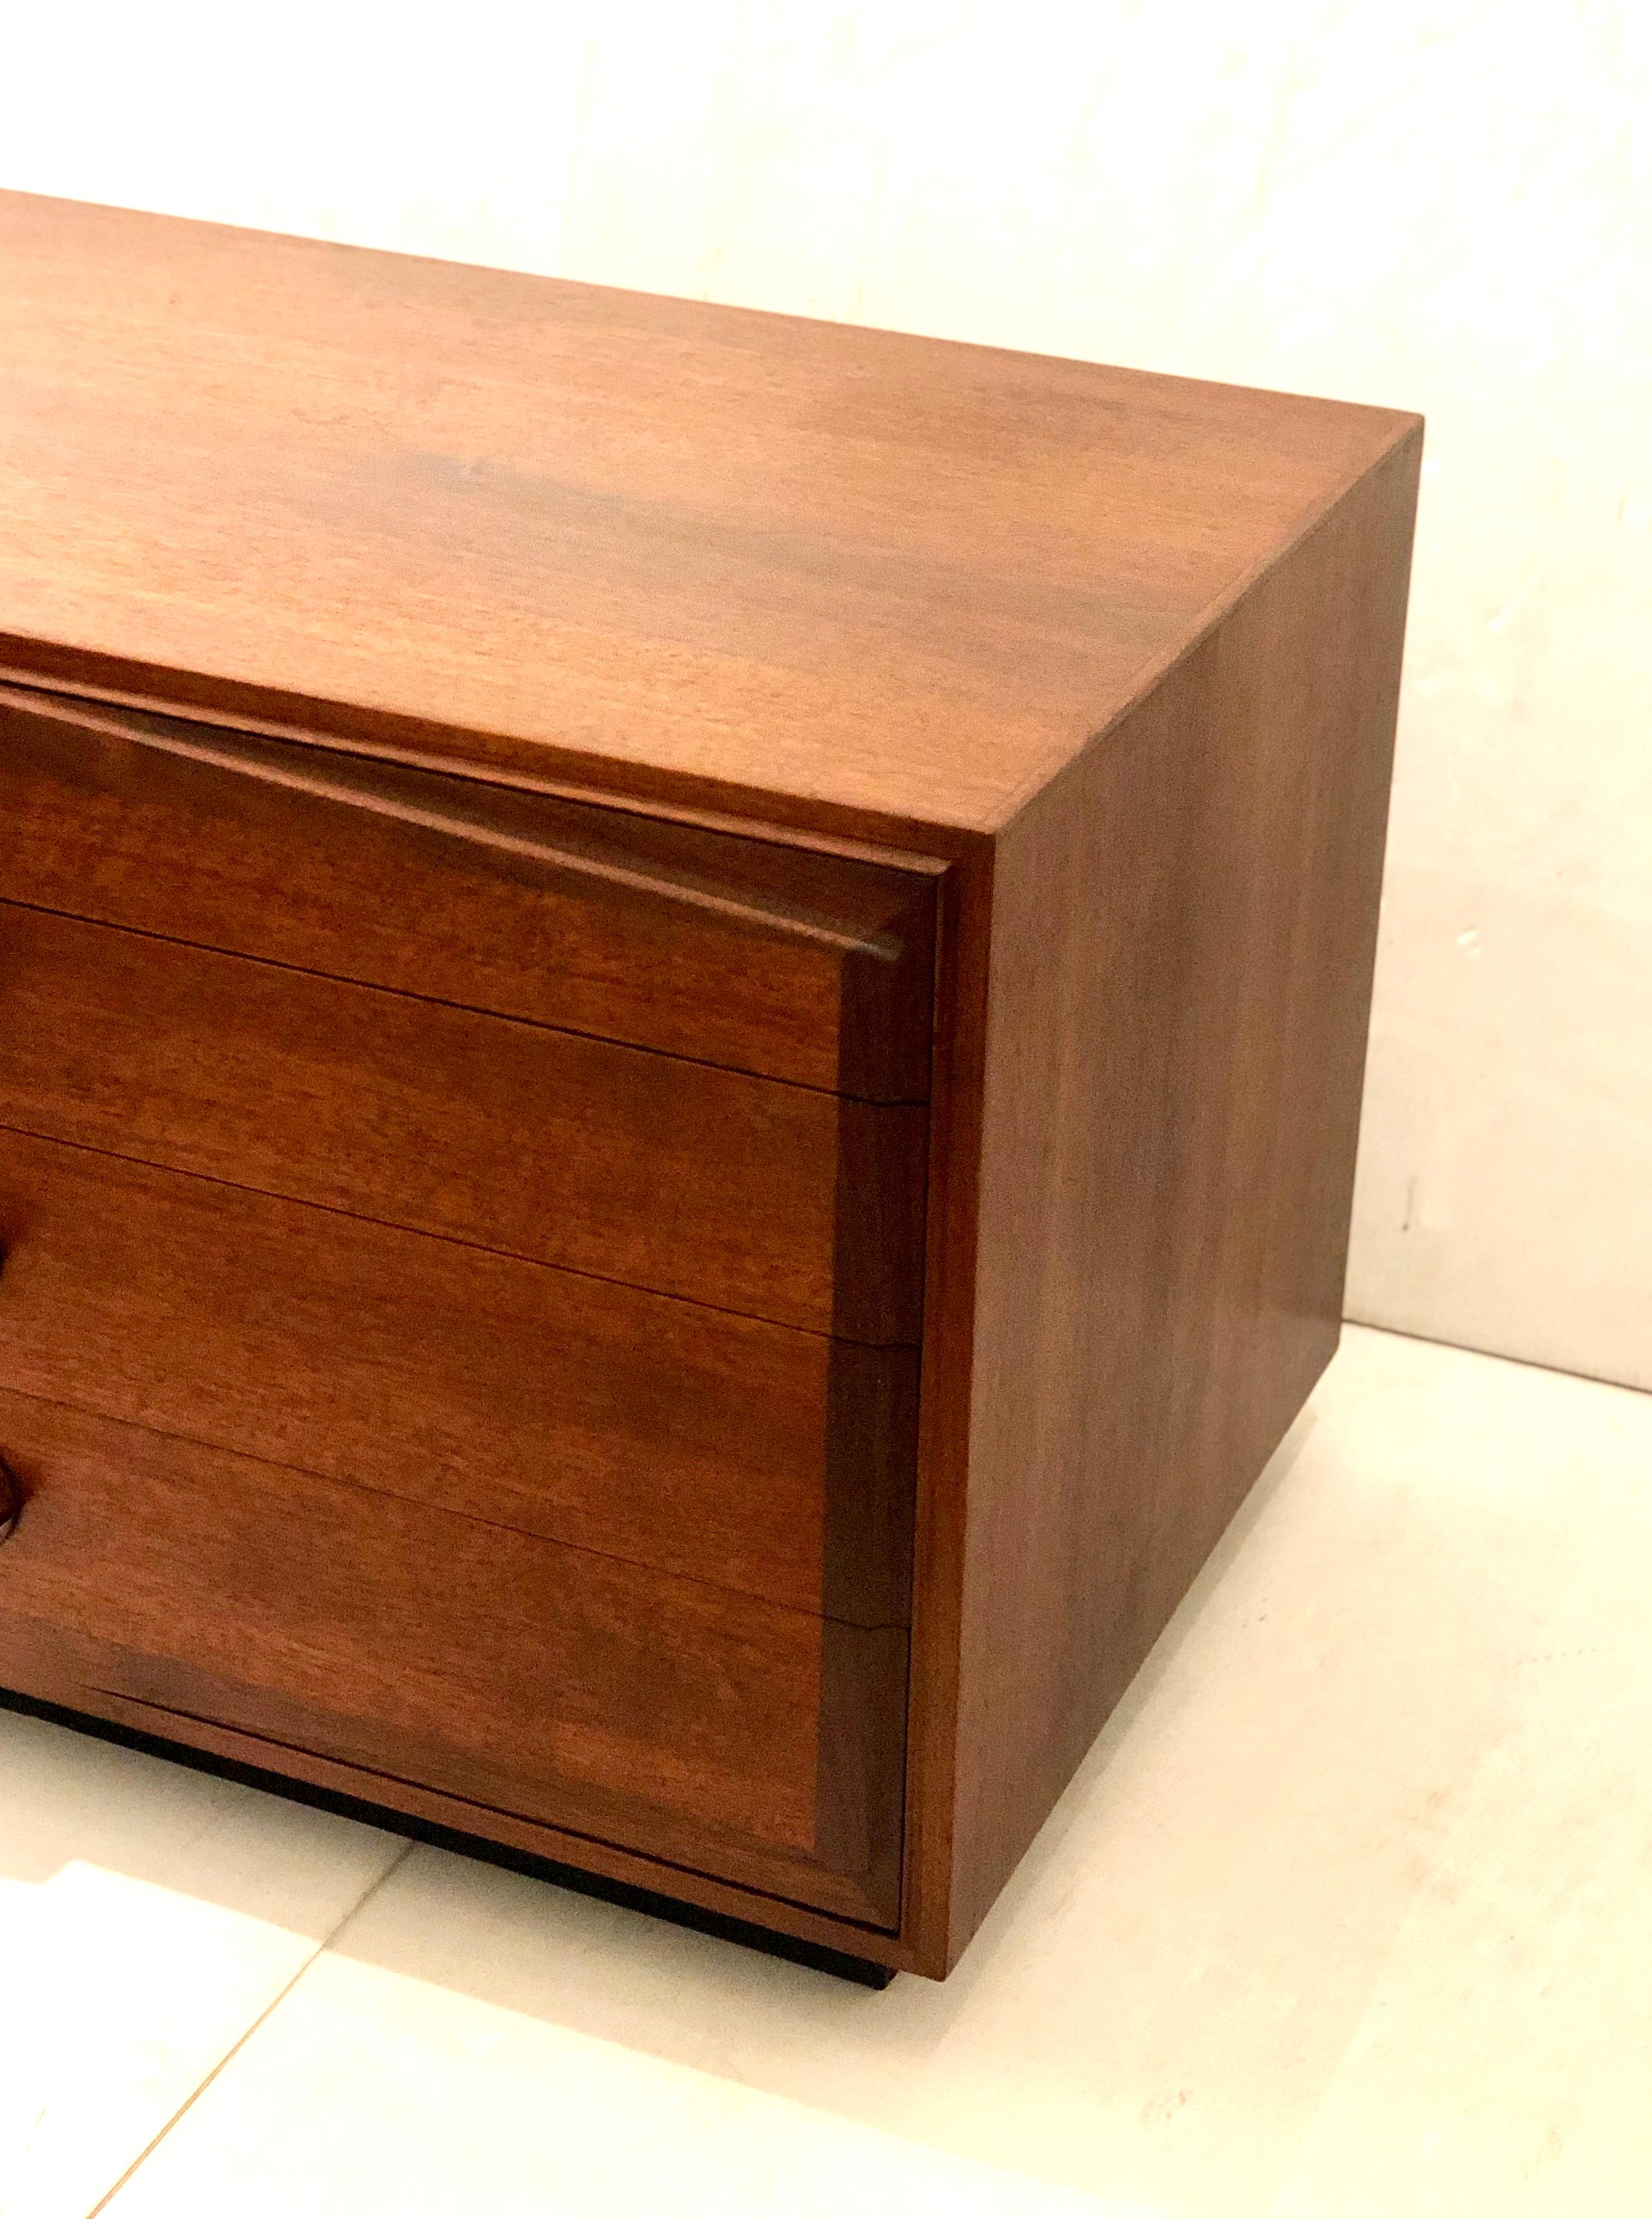 20th Century American Mid-Century Modern Low Dresser Cabinet Drawers